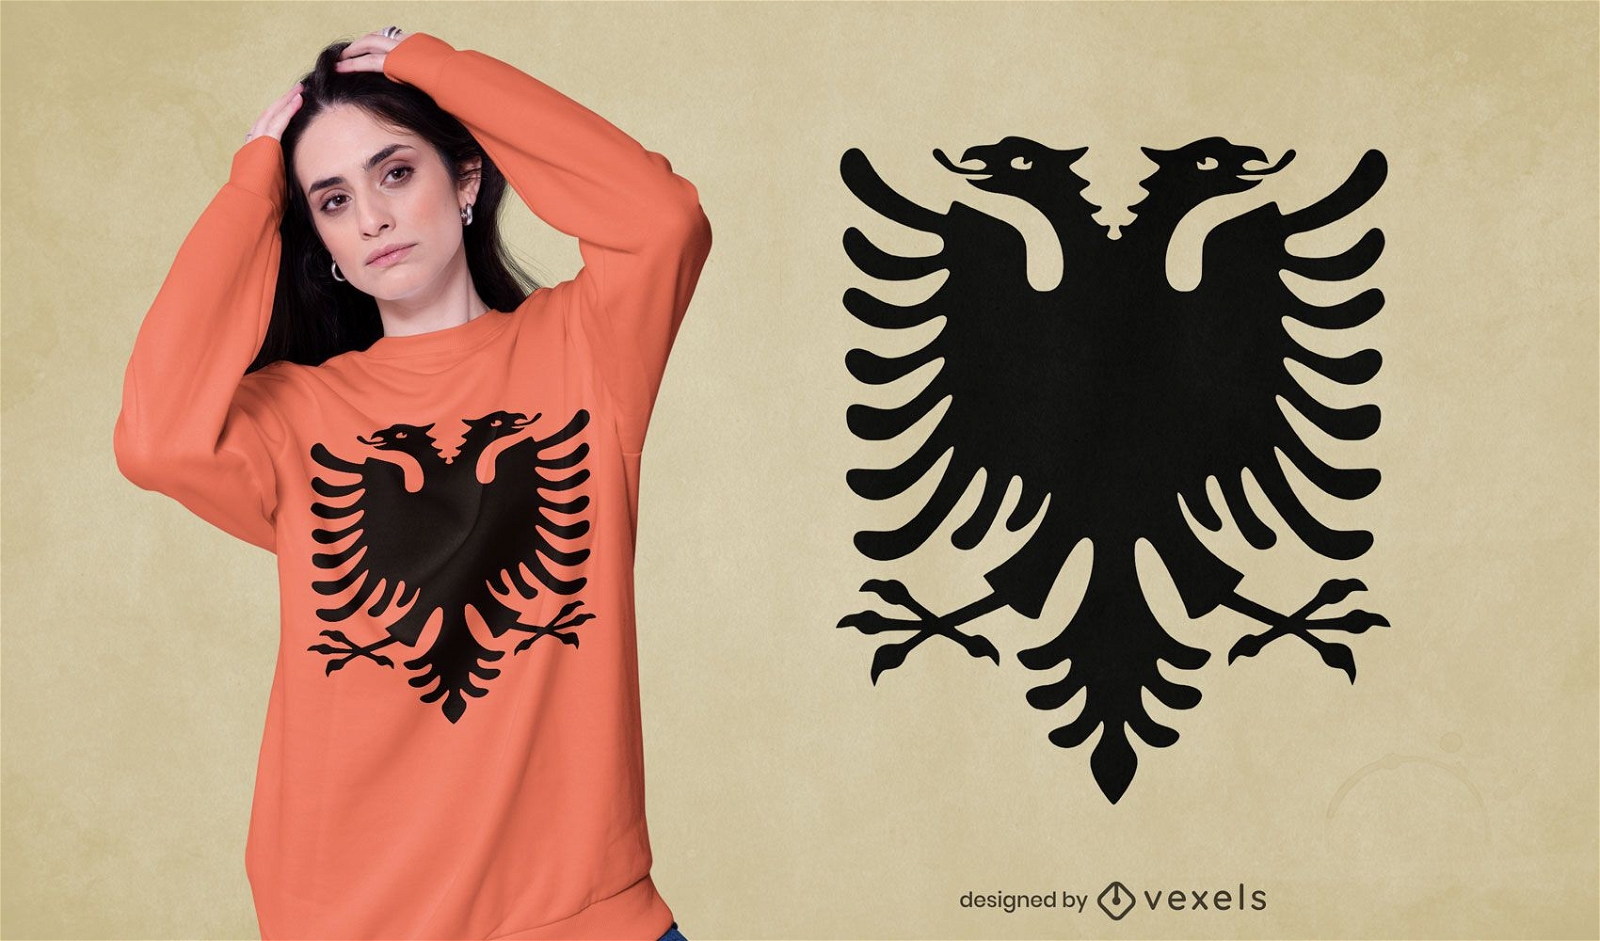 Double-headed eagle t-shirt design